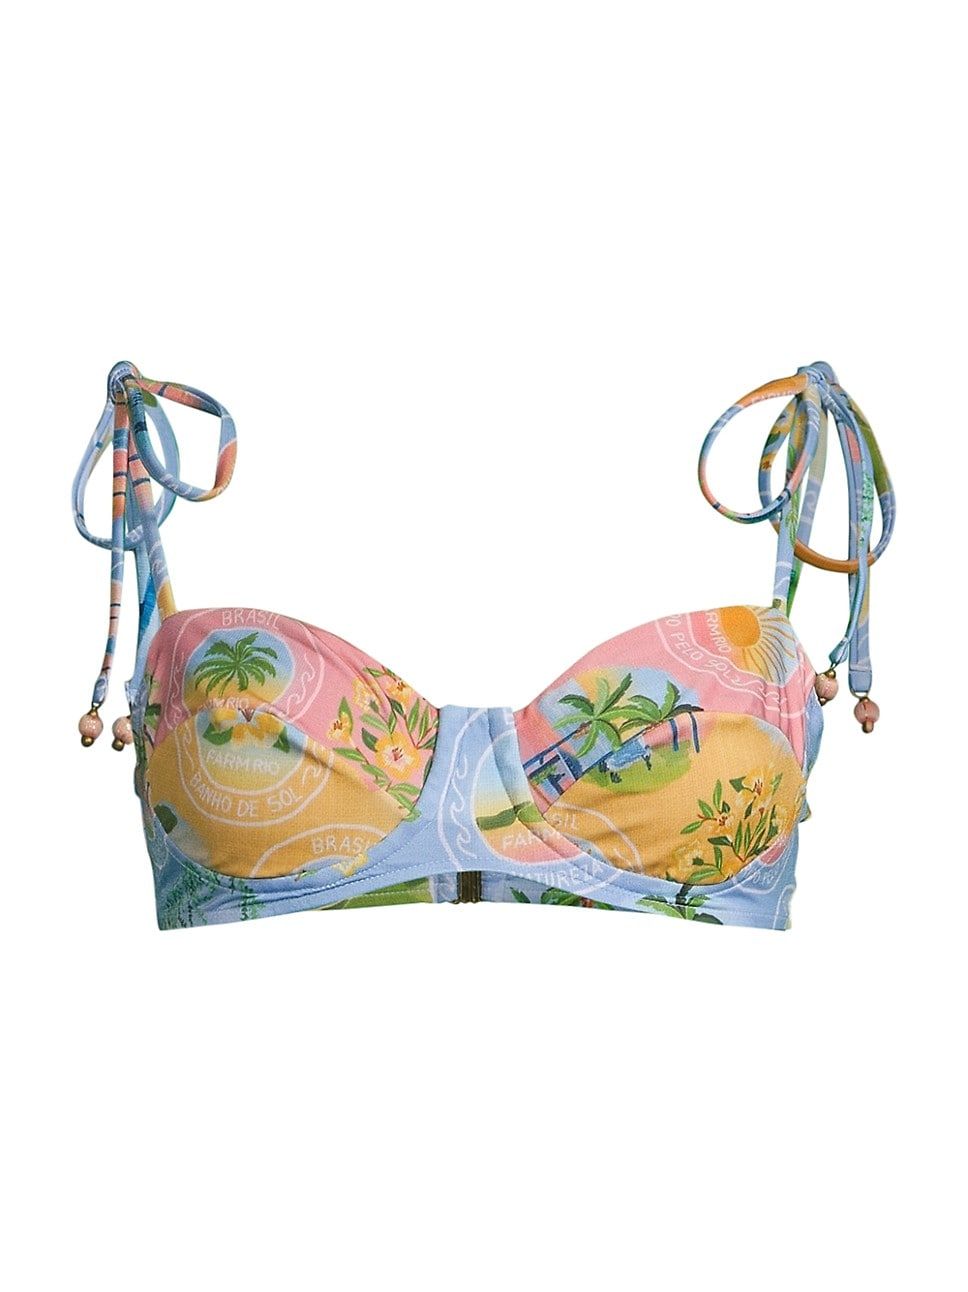 Rio Stamps Bra Bikini Top | Saks Fifth Avenue